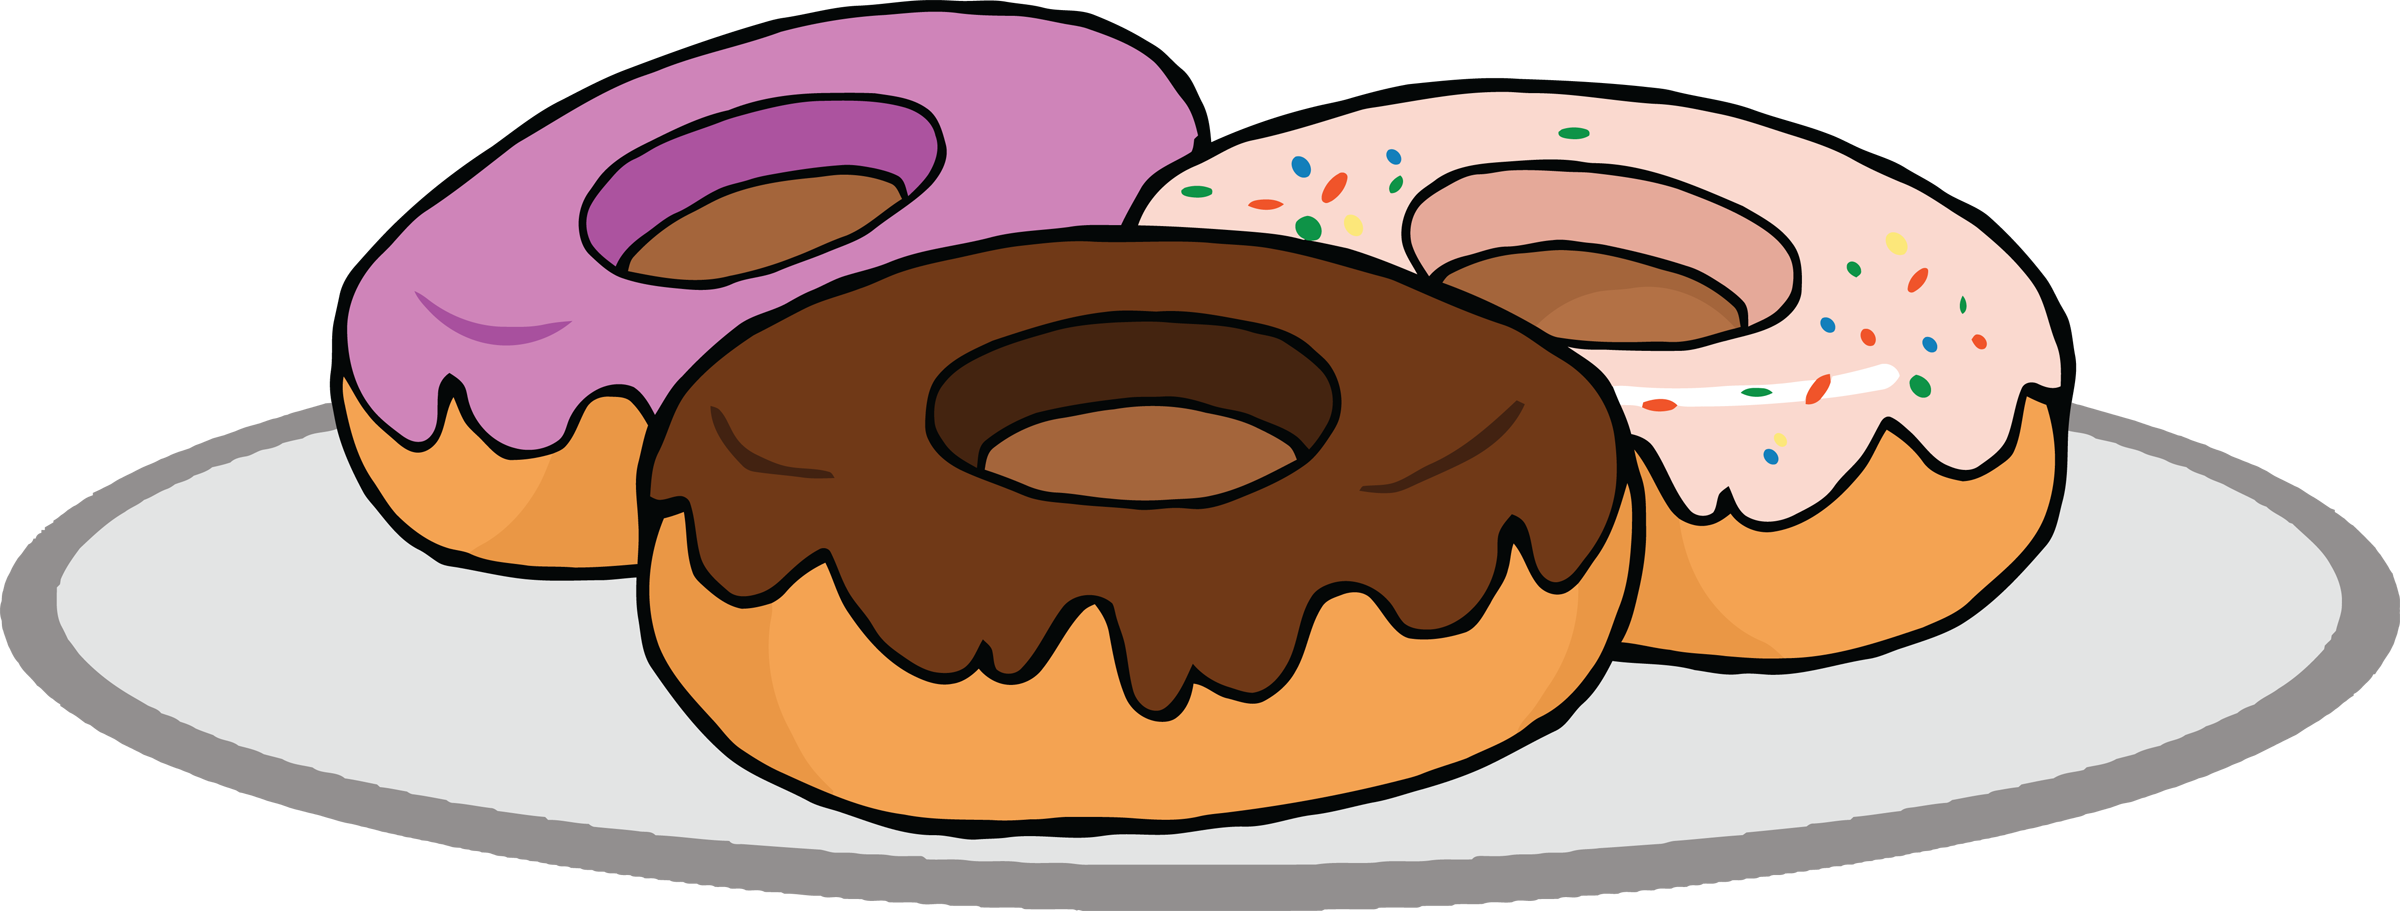 Doughnut Clip Art Images Free